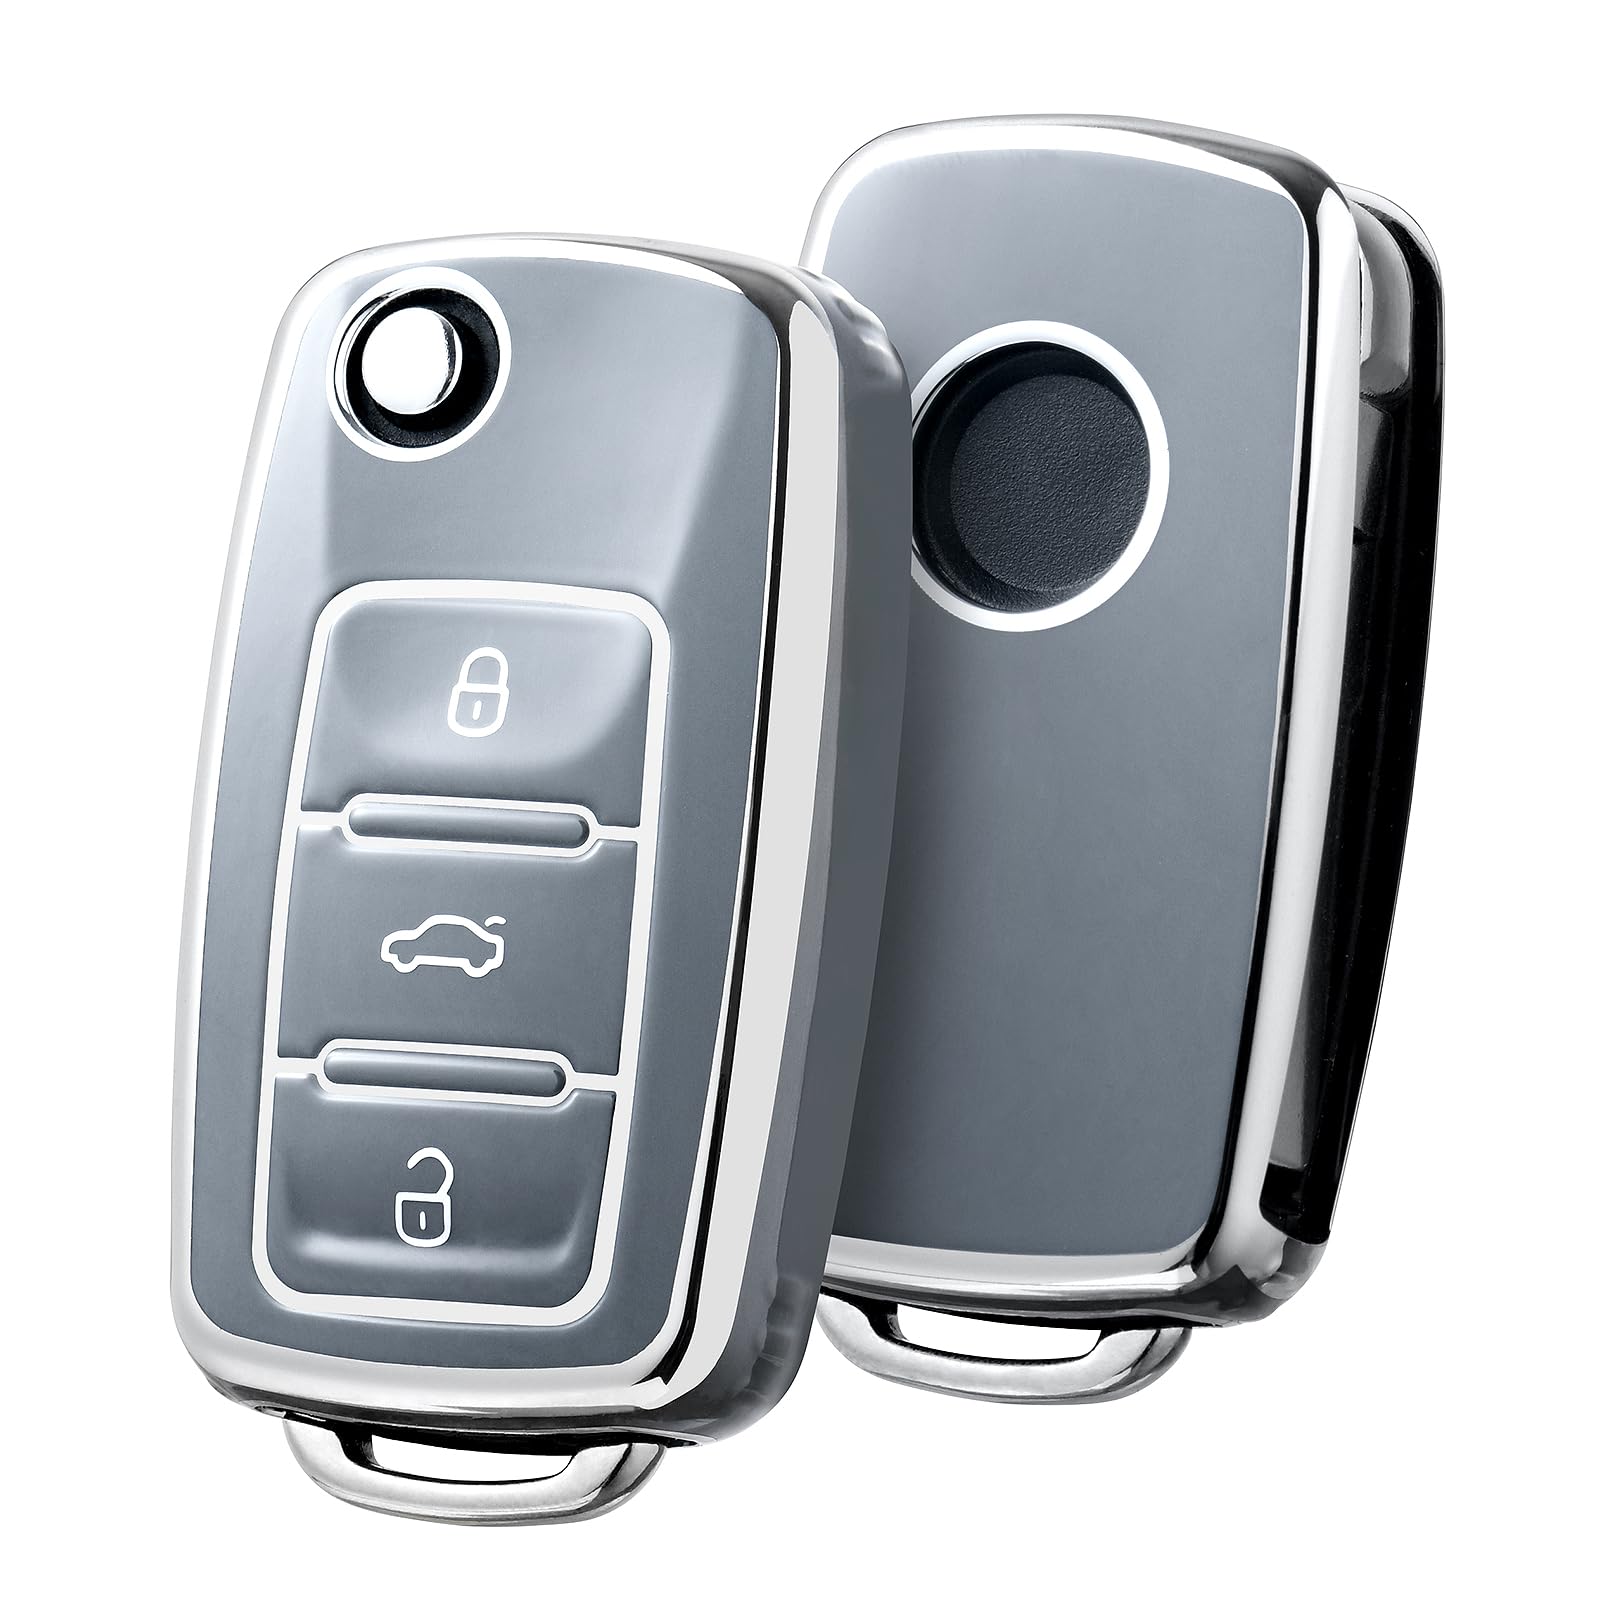 OATSBASF Autoschlüssel Hülle VW, VW Golf Schlüsselbox, Schlüsselhülle Cover für vw Polo Passat Skoda Seat 3-Tasten (Silber Rand-Grau) von OATSBASF